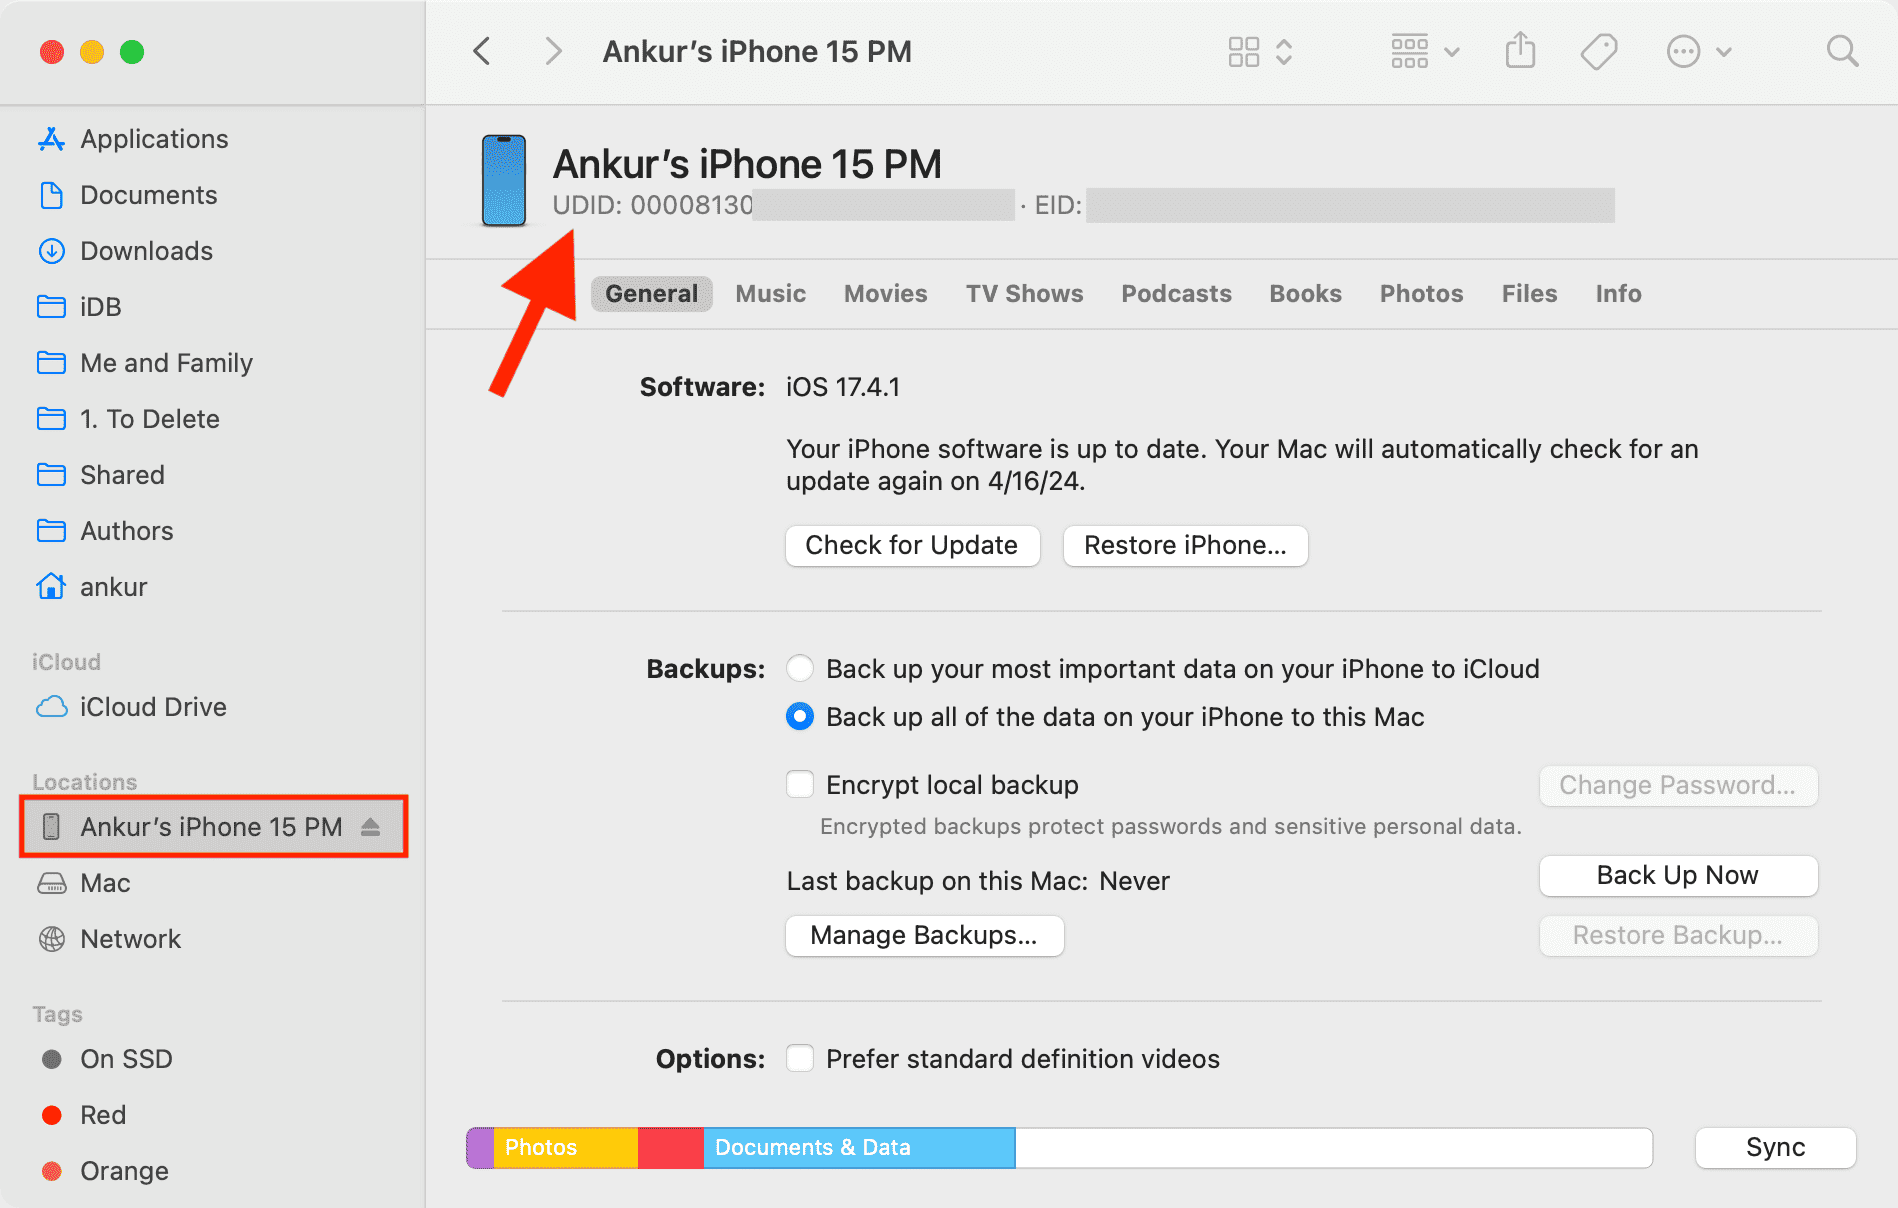 iPhone UDID in Finder on Mac